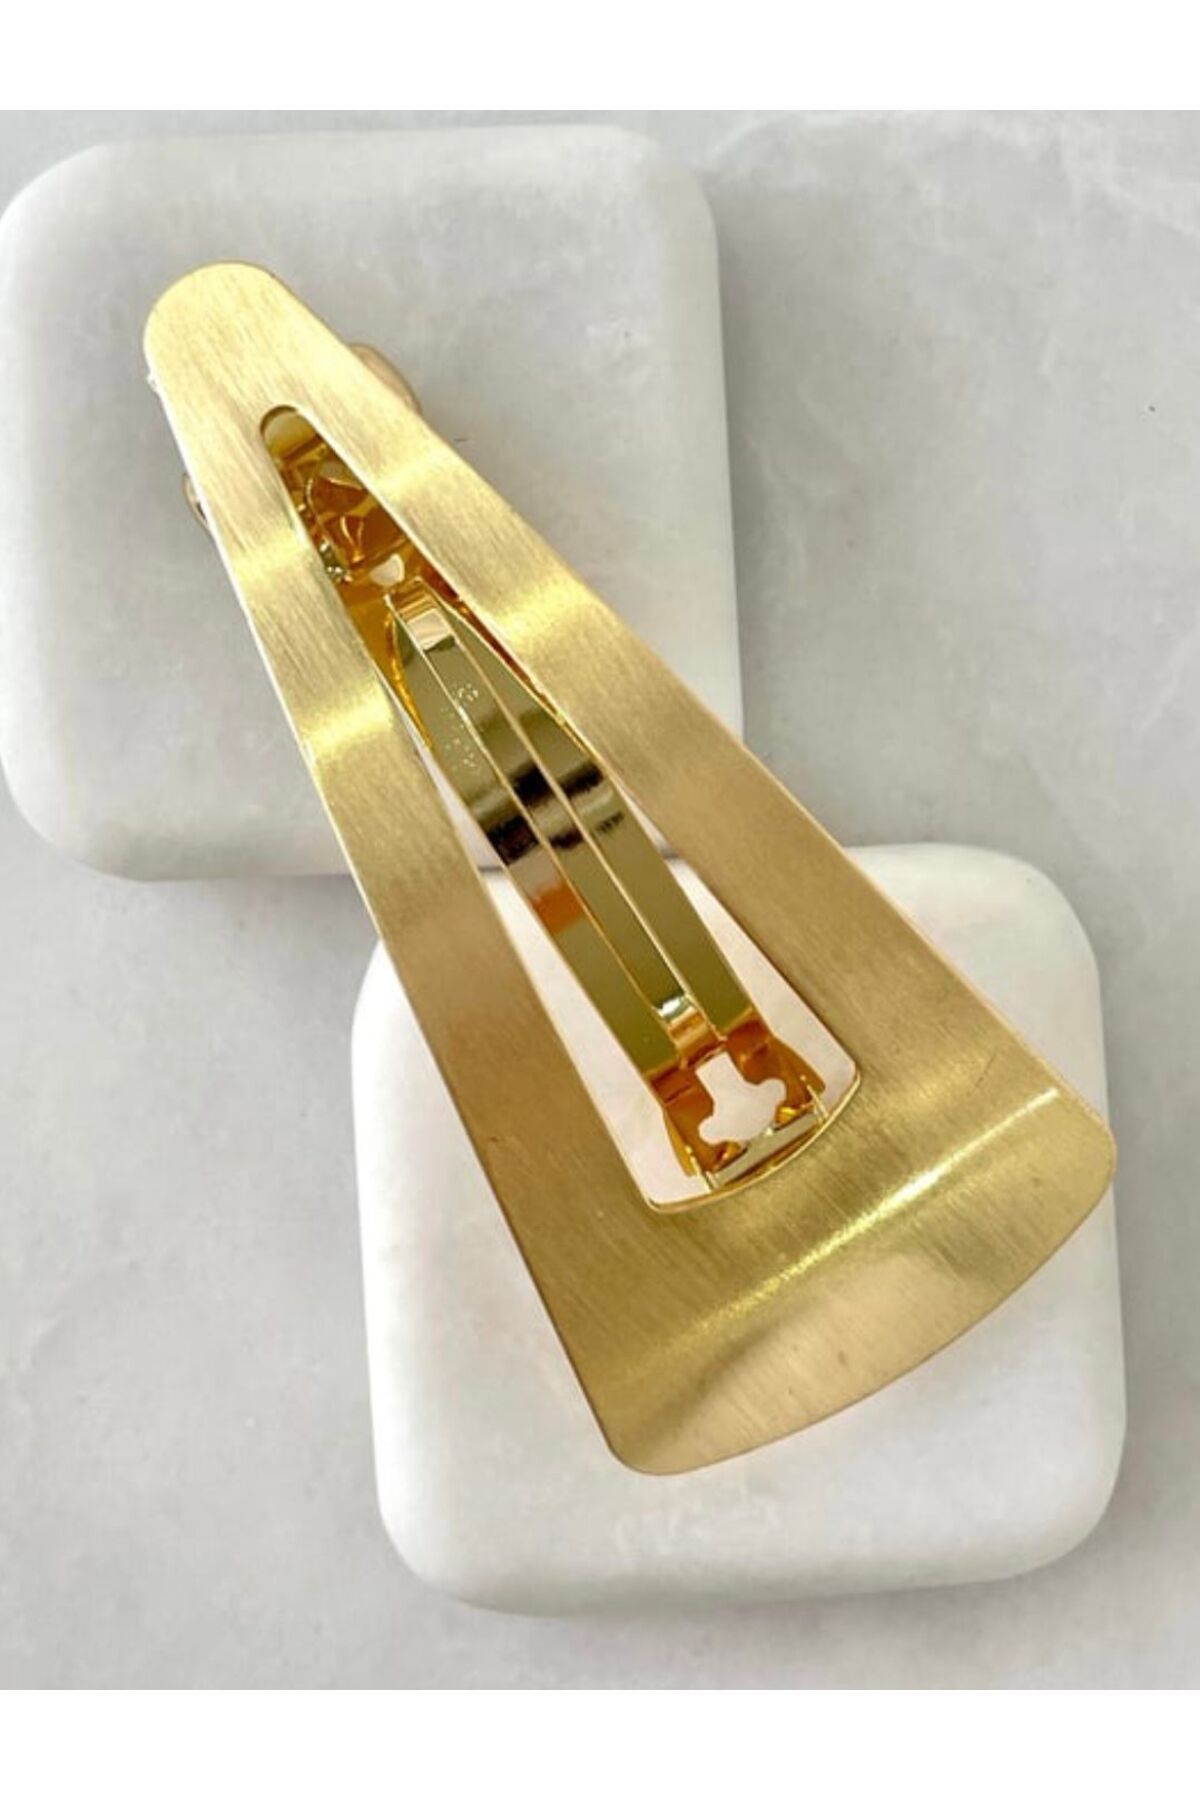 Rachel Gold Büyük Üçgen Model Otomatik Kilitli Metal Toka-9 cm